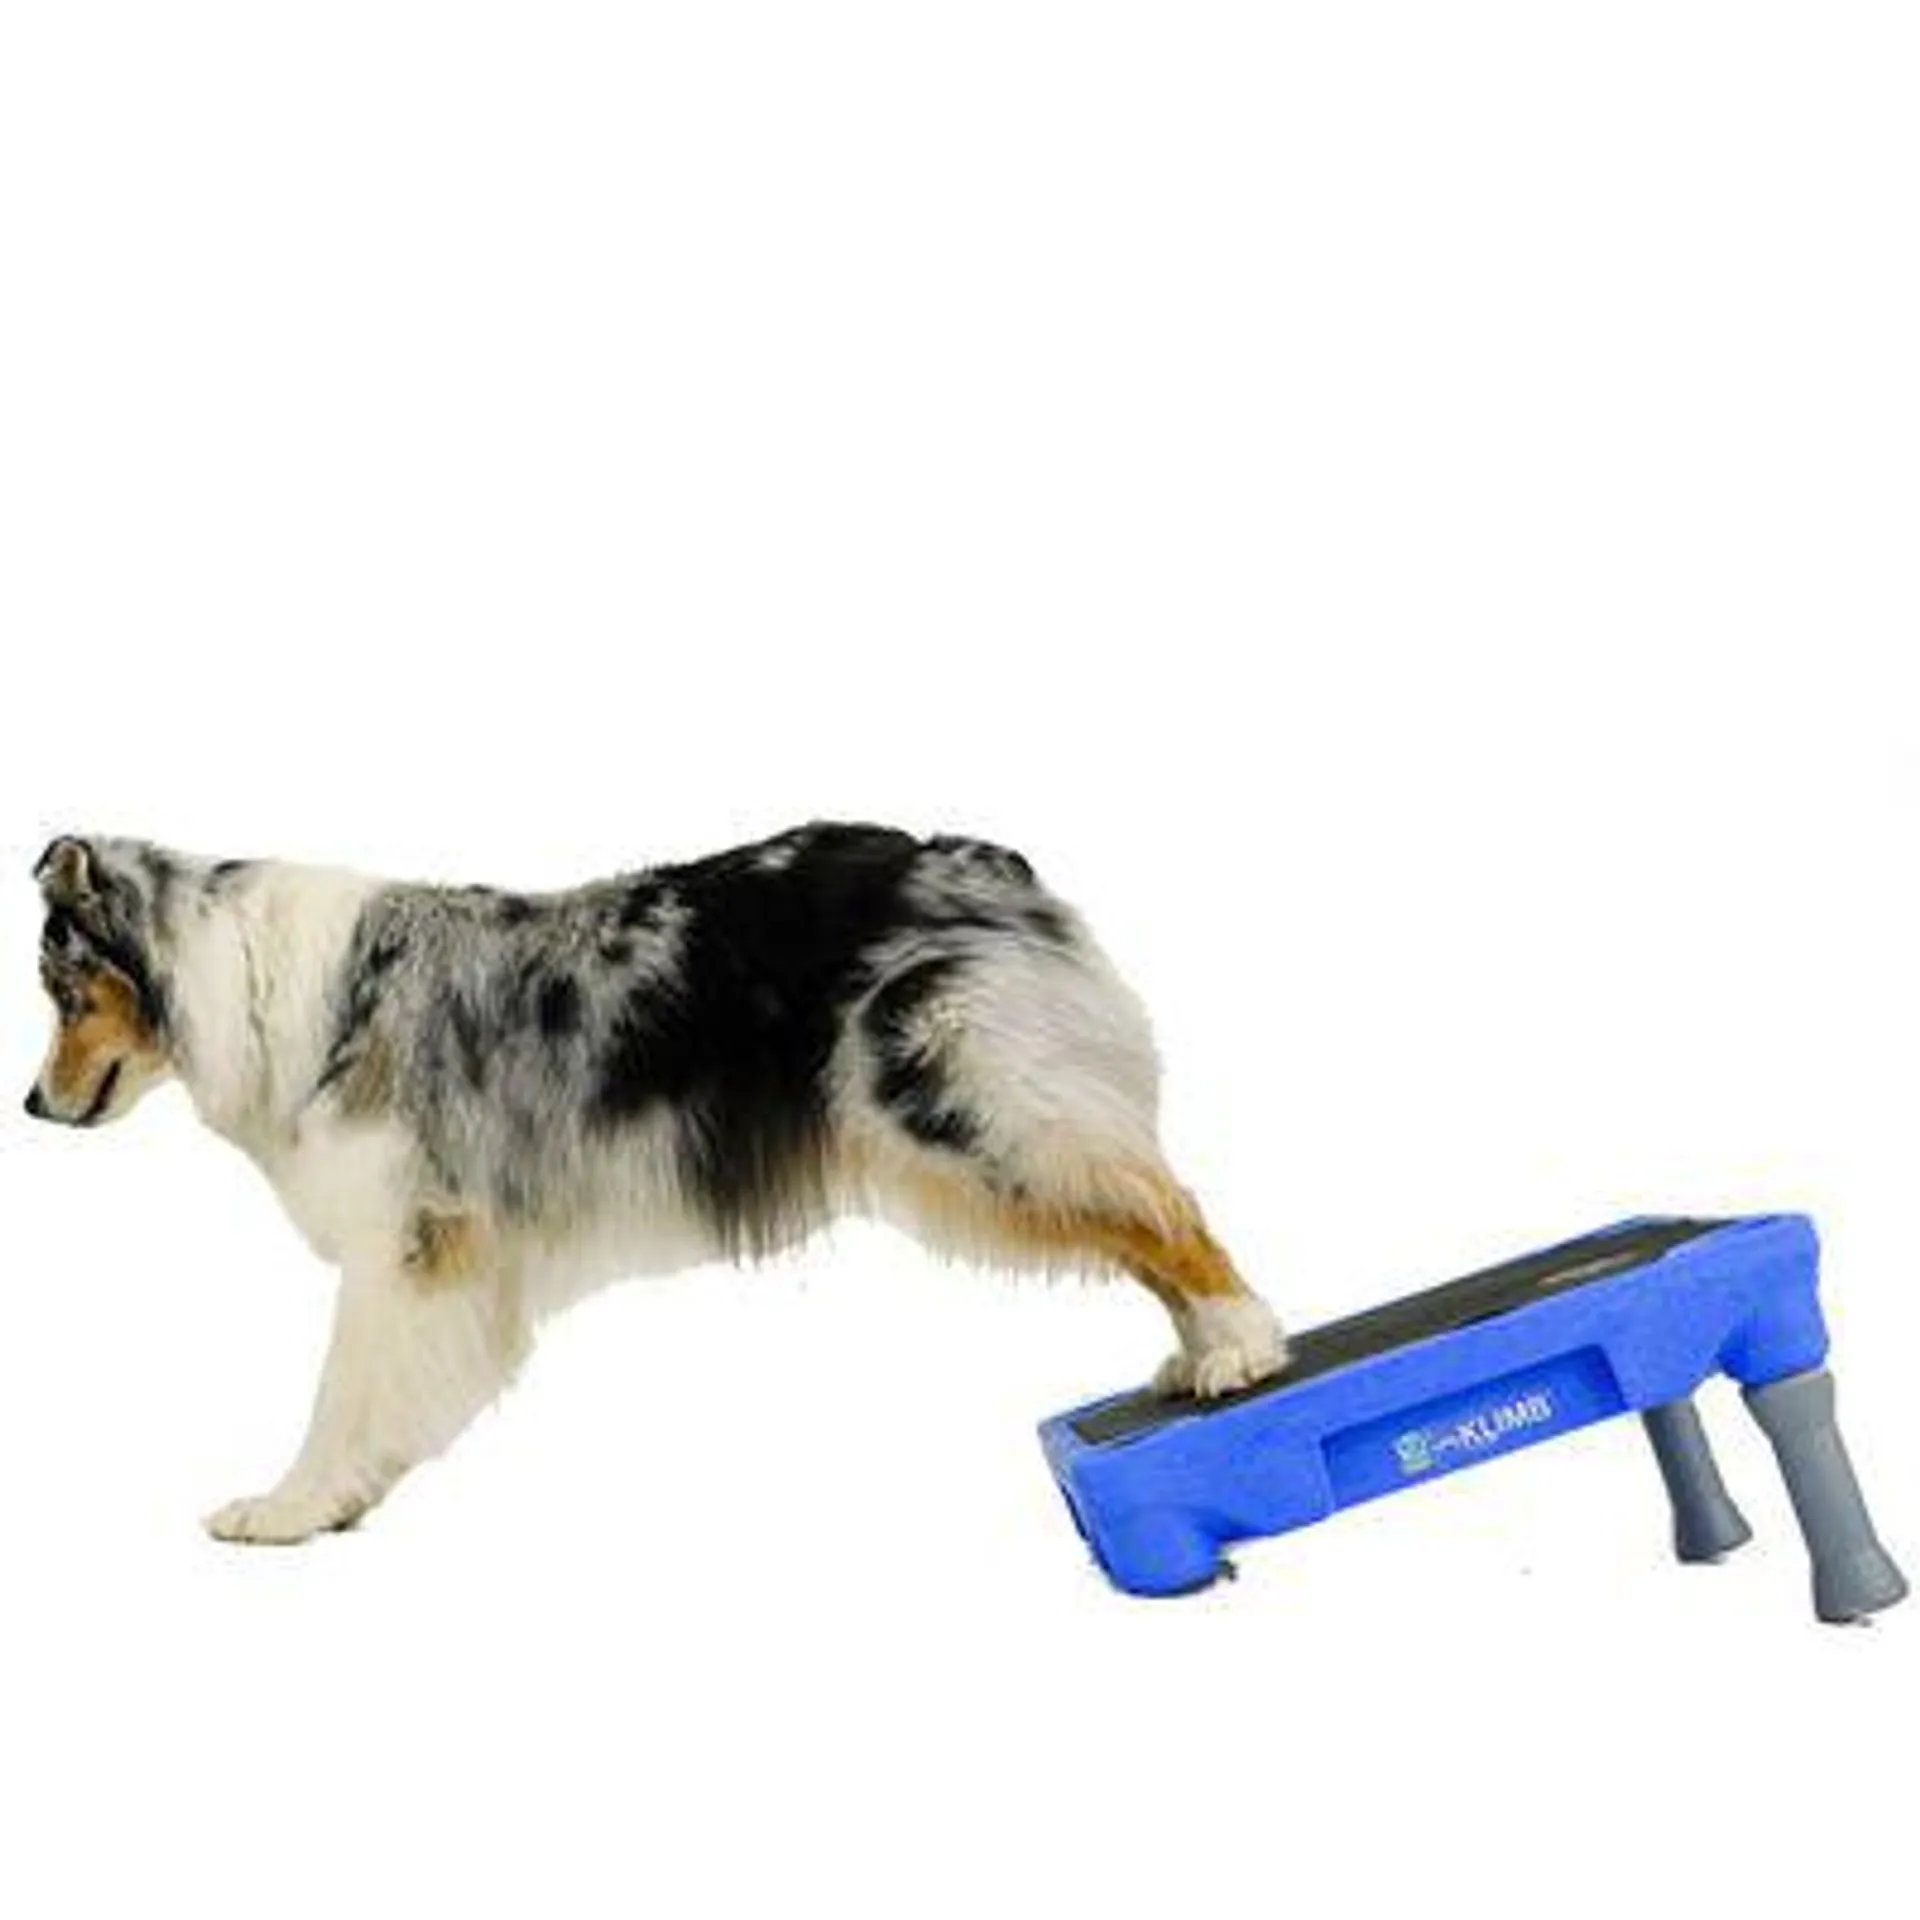 BLUE-9 Traction Mat for KLIMB Dog Training System